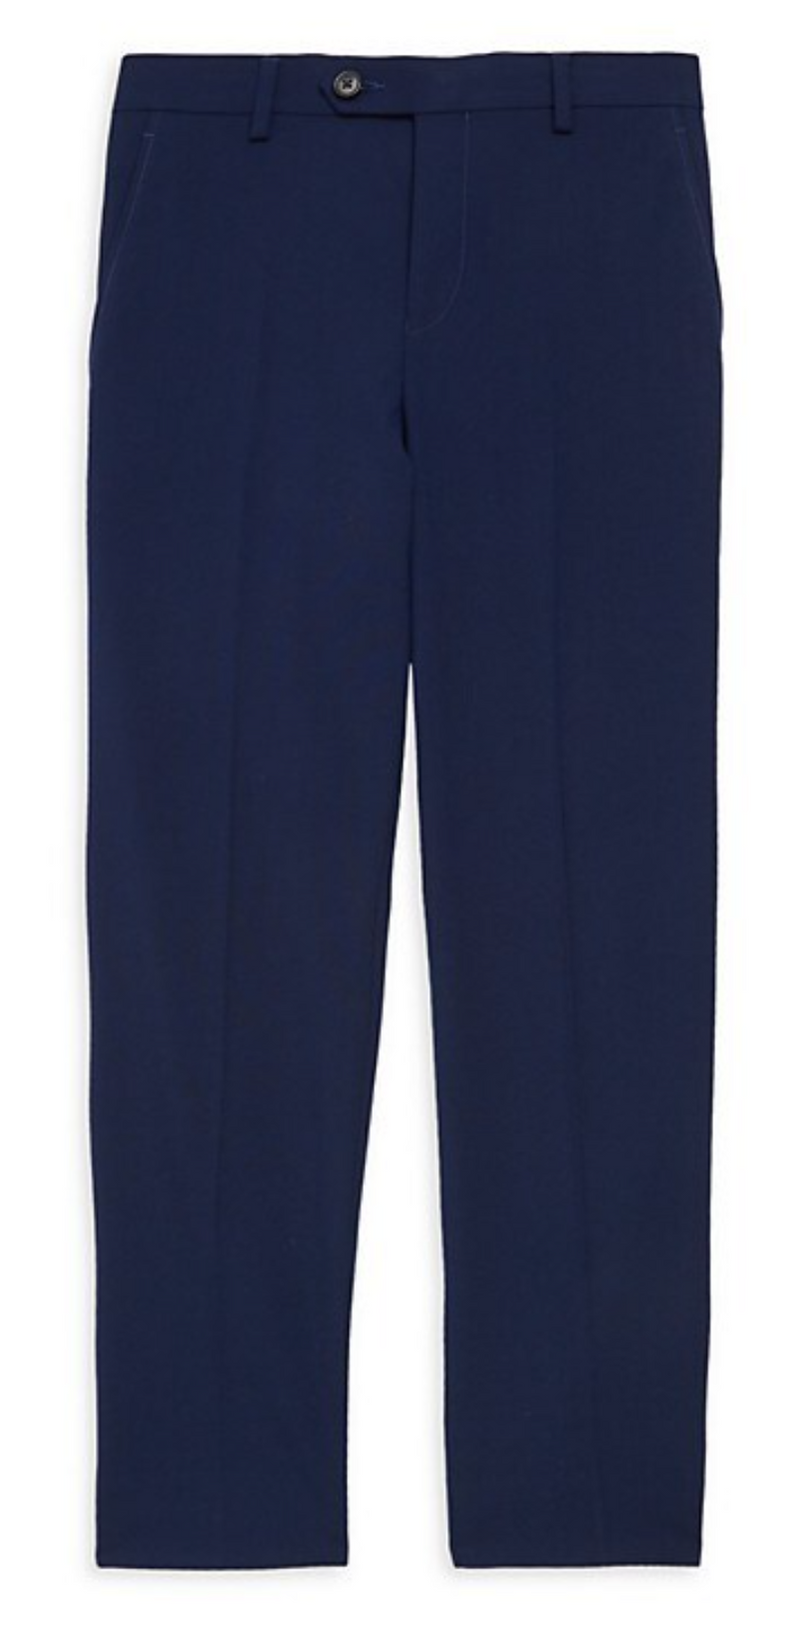 Saks Fifth Avenue Navy Blue Formal Pants